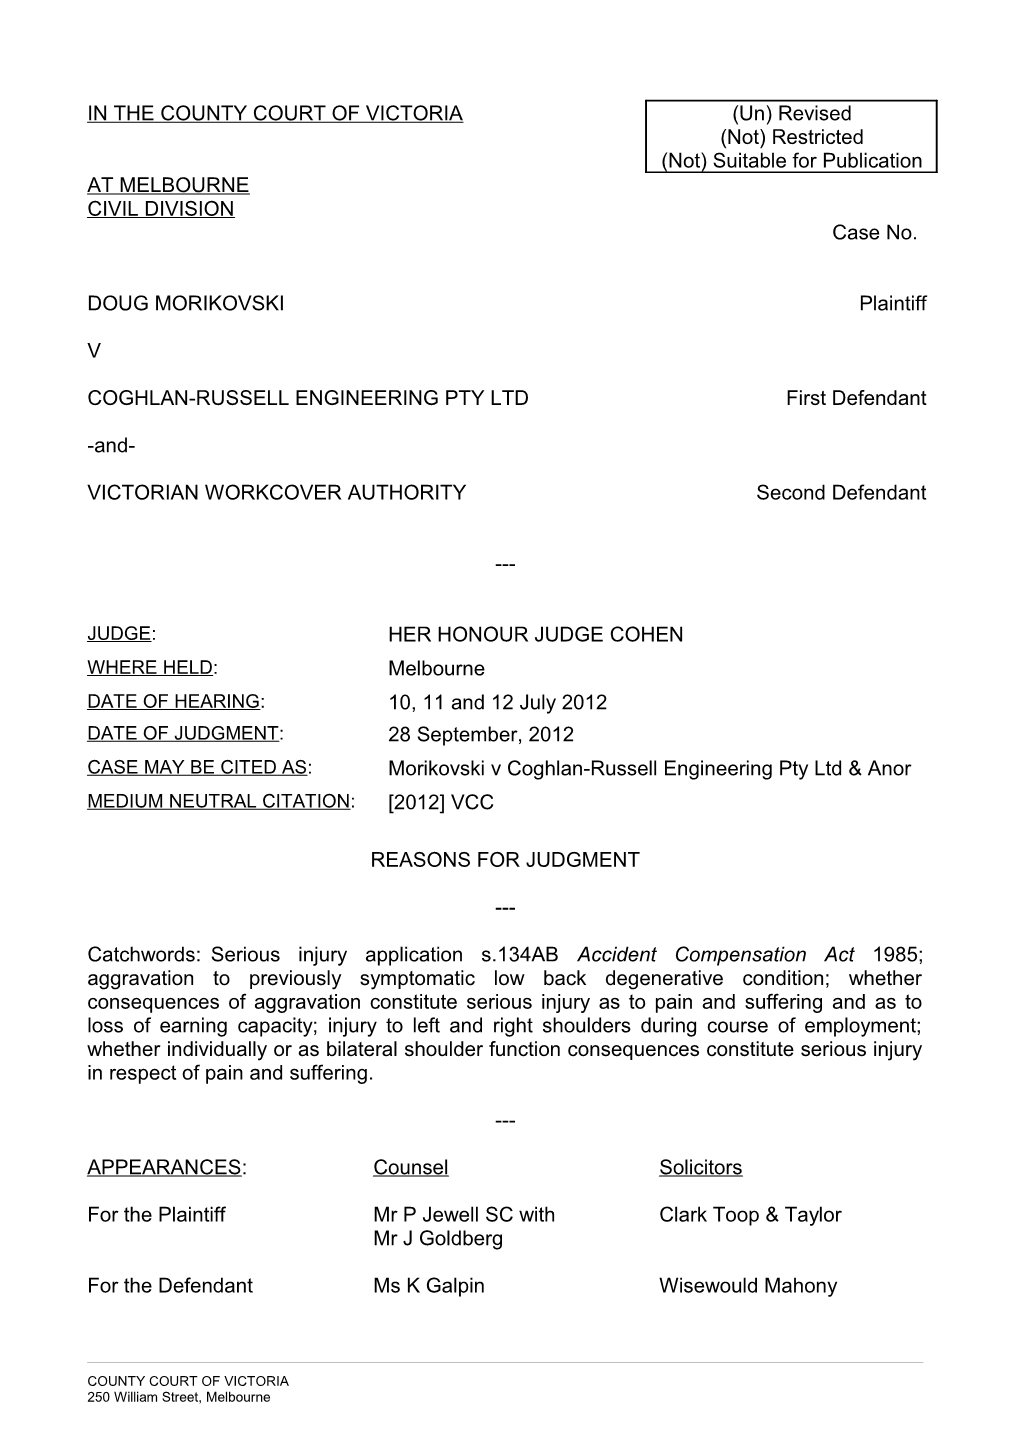 Morikovski V Coghlan-Russell Engineering Pty Ltd - / / - Judge Cohen